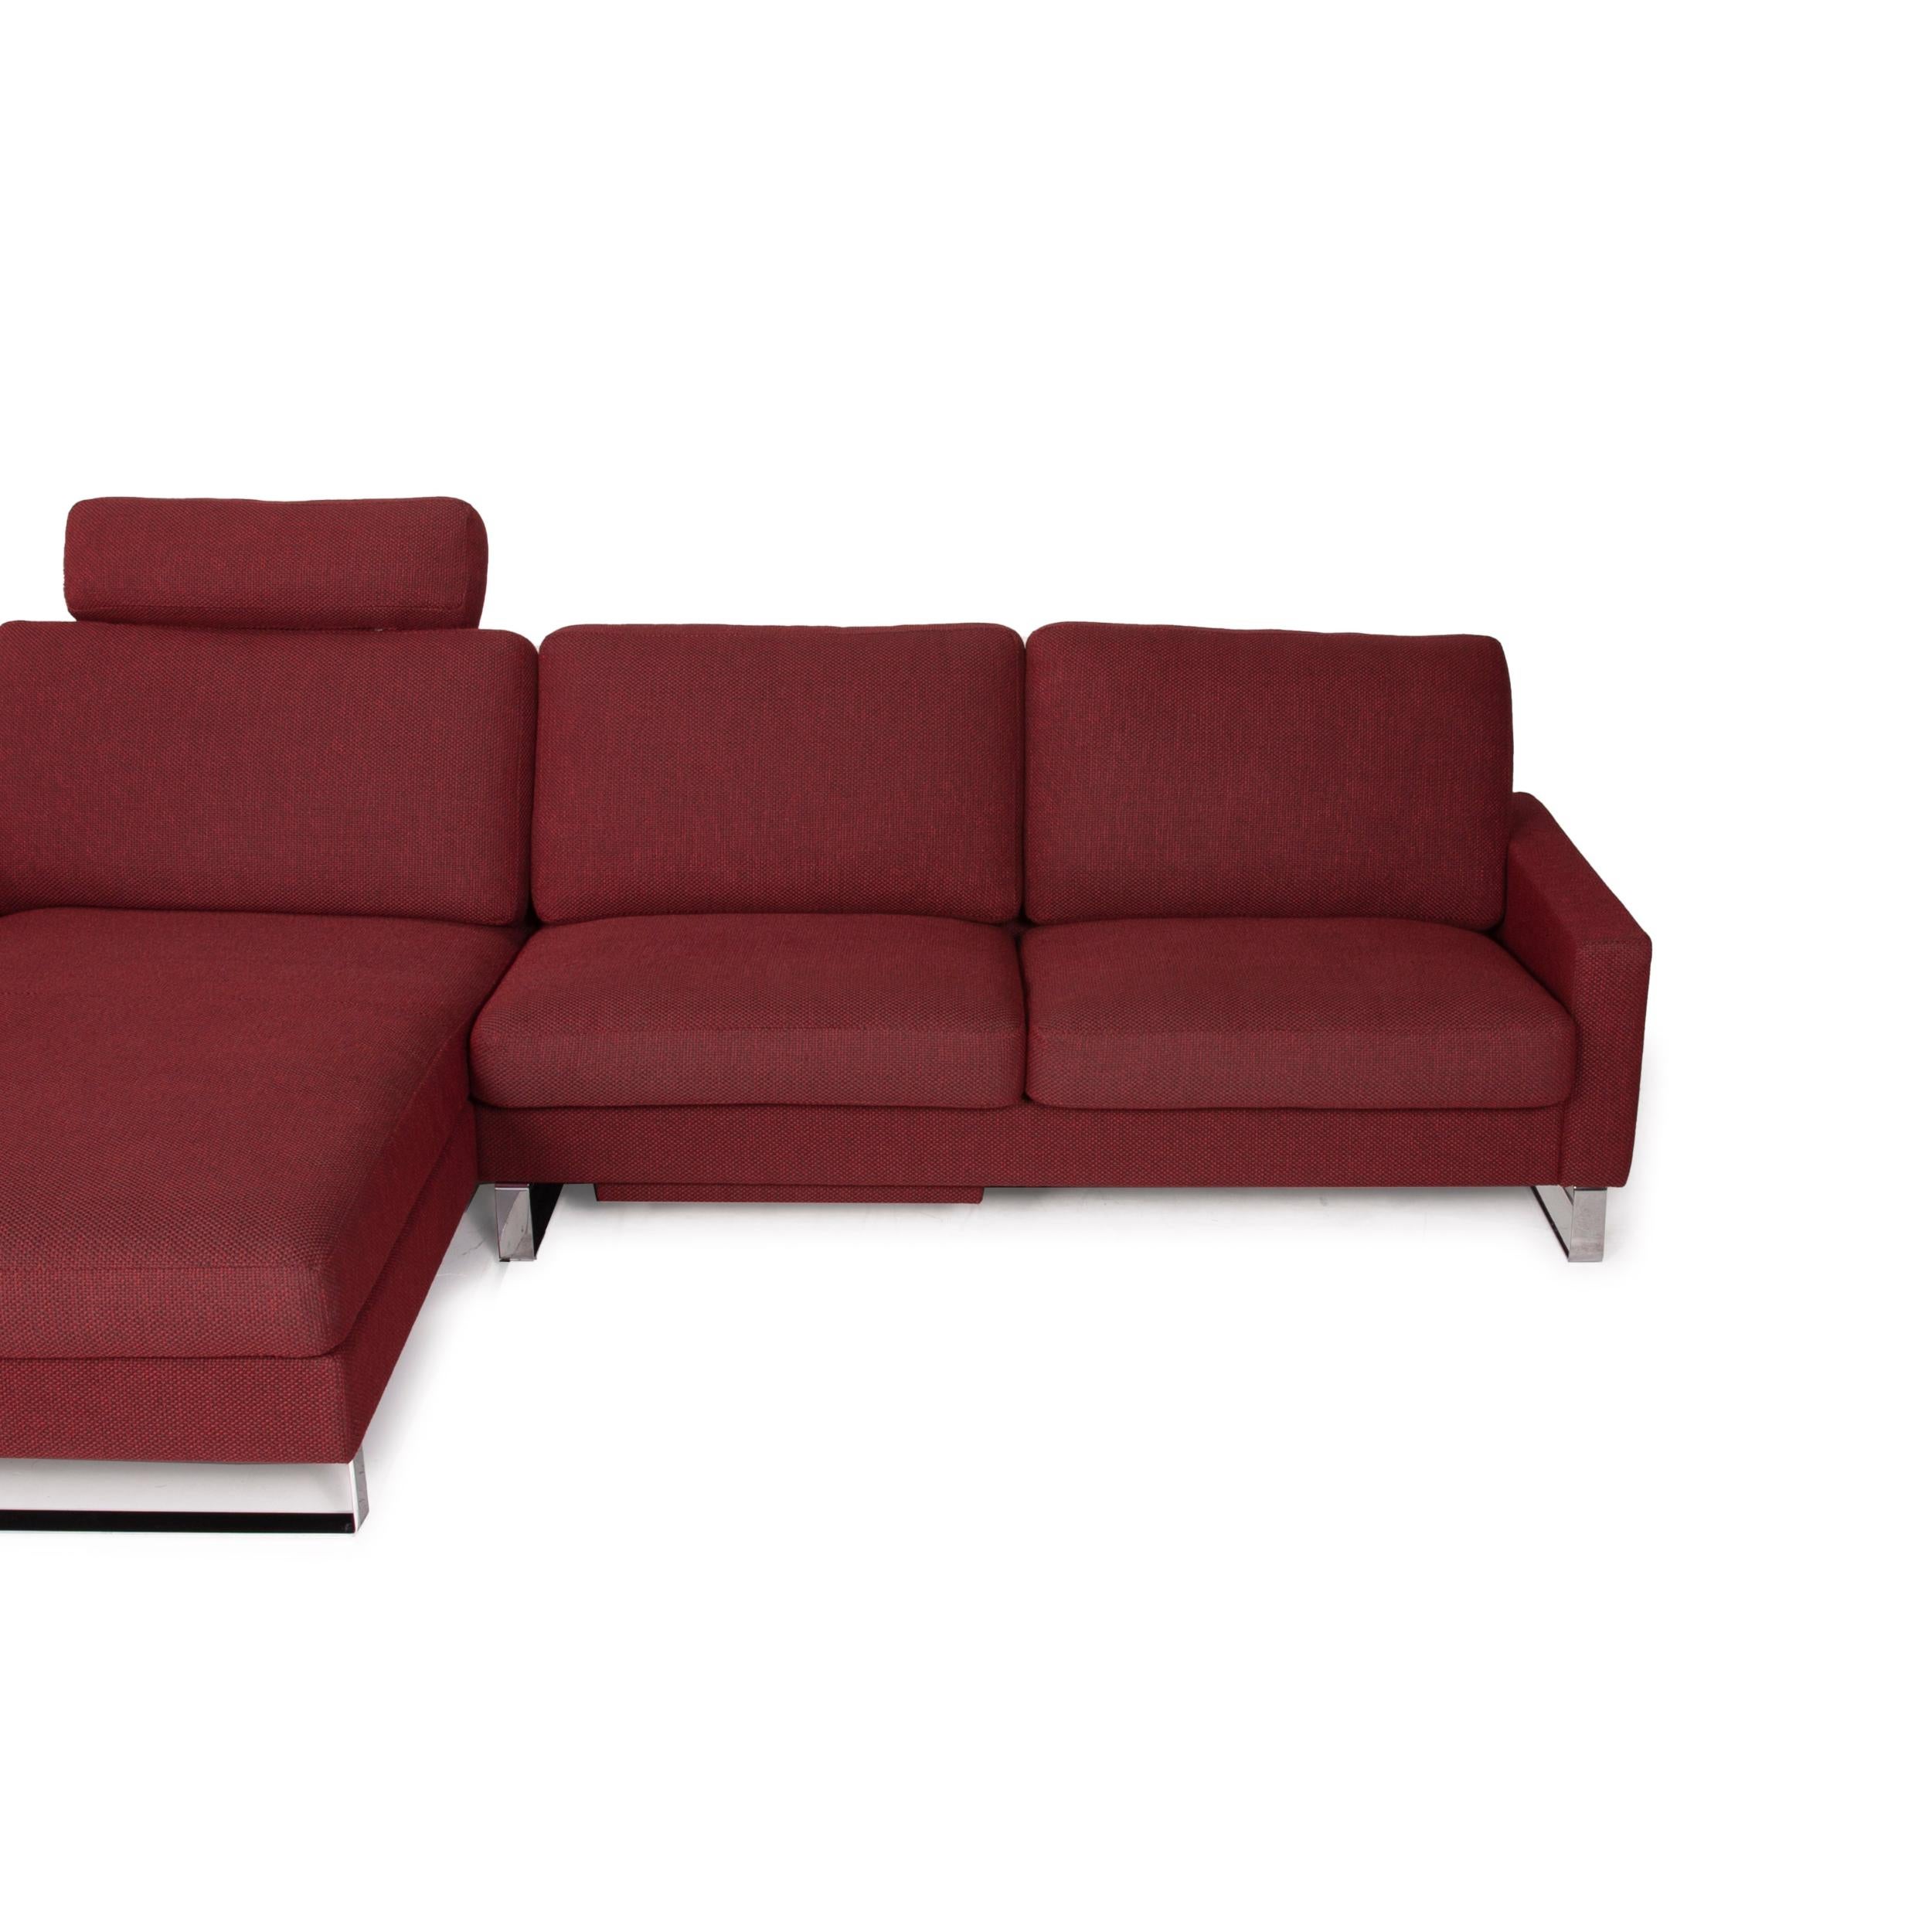 Erpo CL 500 Fabric Sofa Red Corner Sofa 2